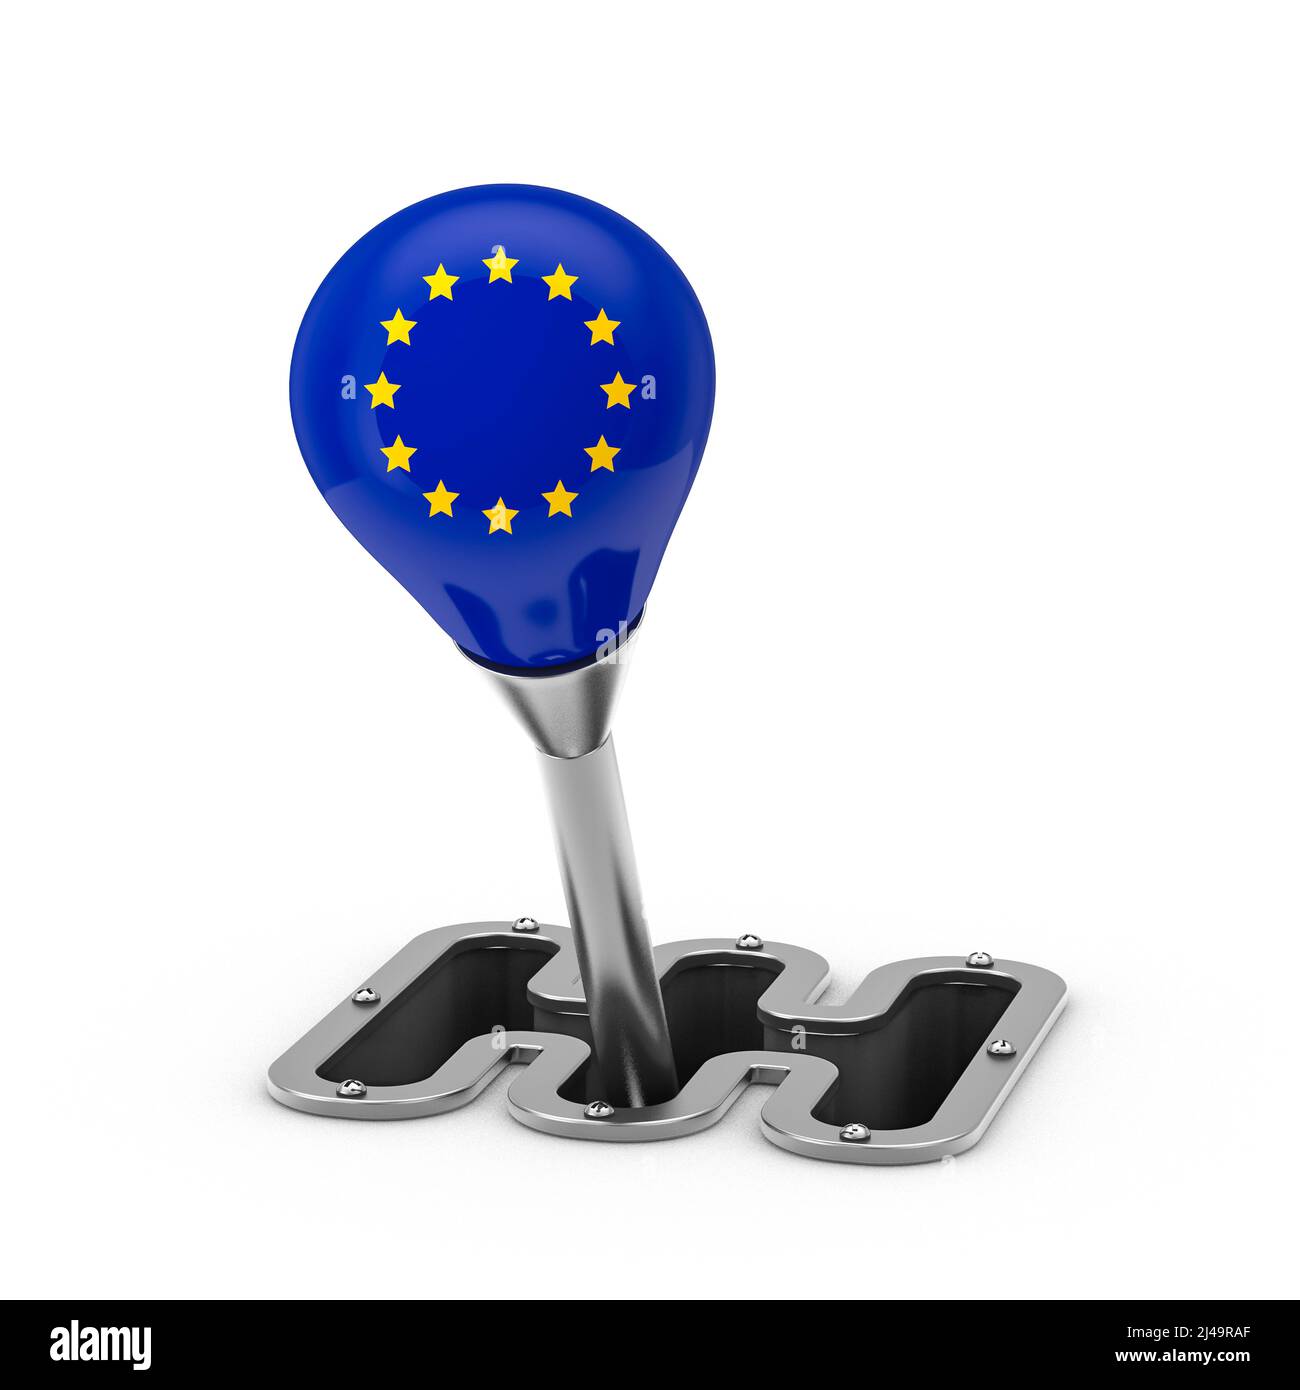 European transportation - 3D illustration of gear stick knob with EU flag isolated on white studio background Stock Photo